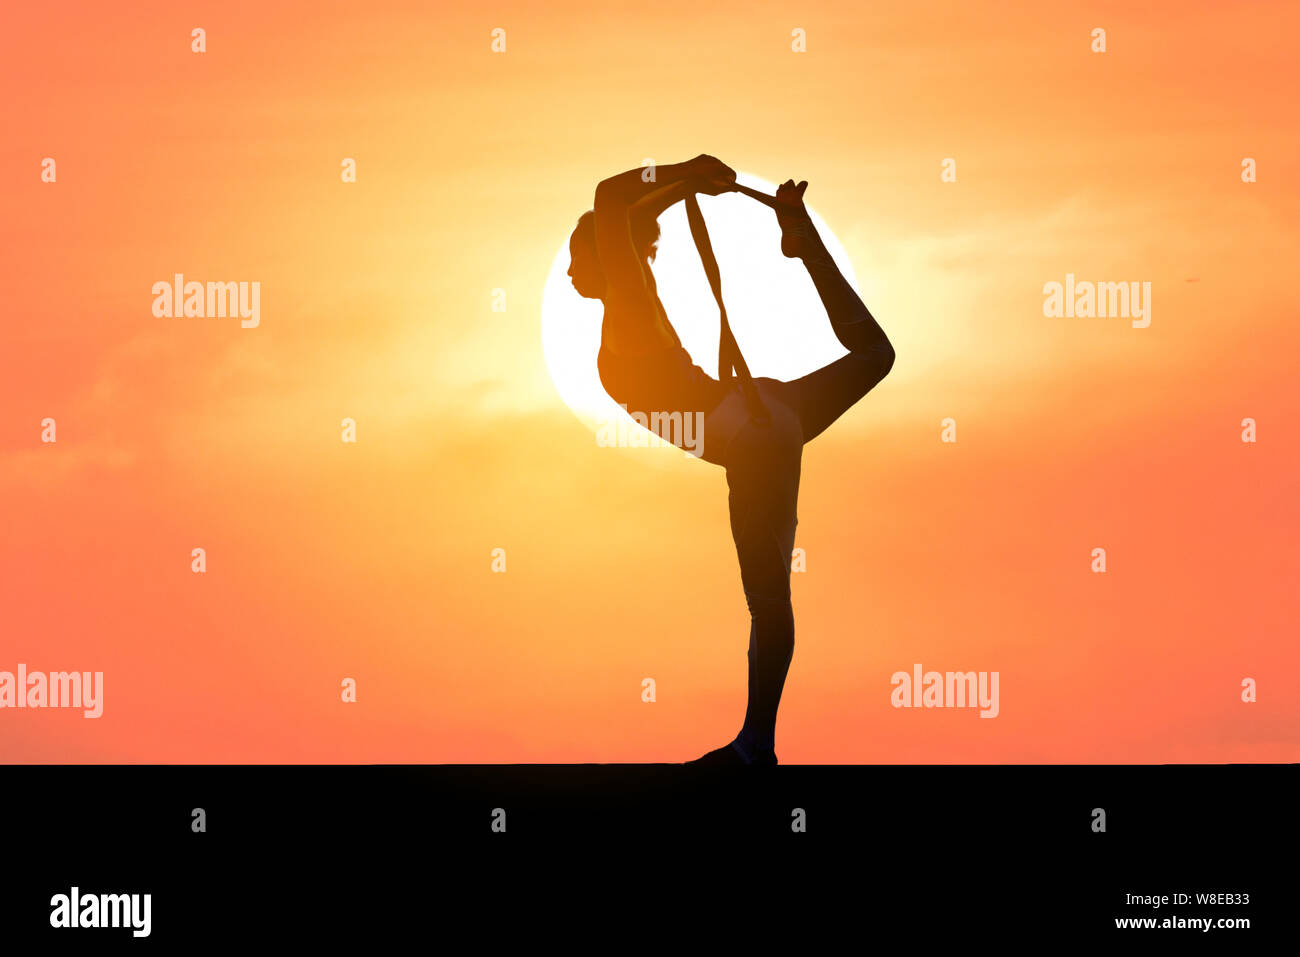 woman practice yoga on mountain with sunset or sunrise background Stock Photo